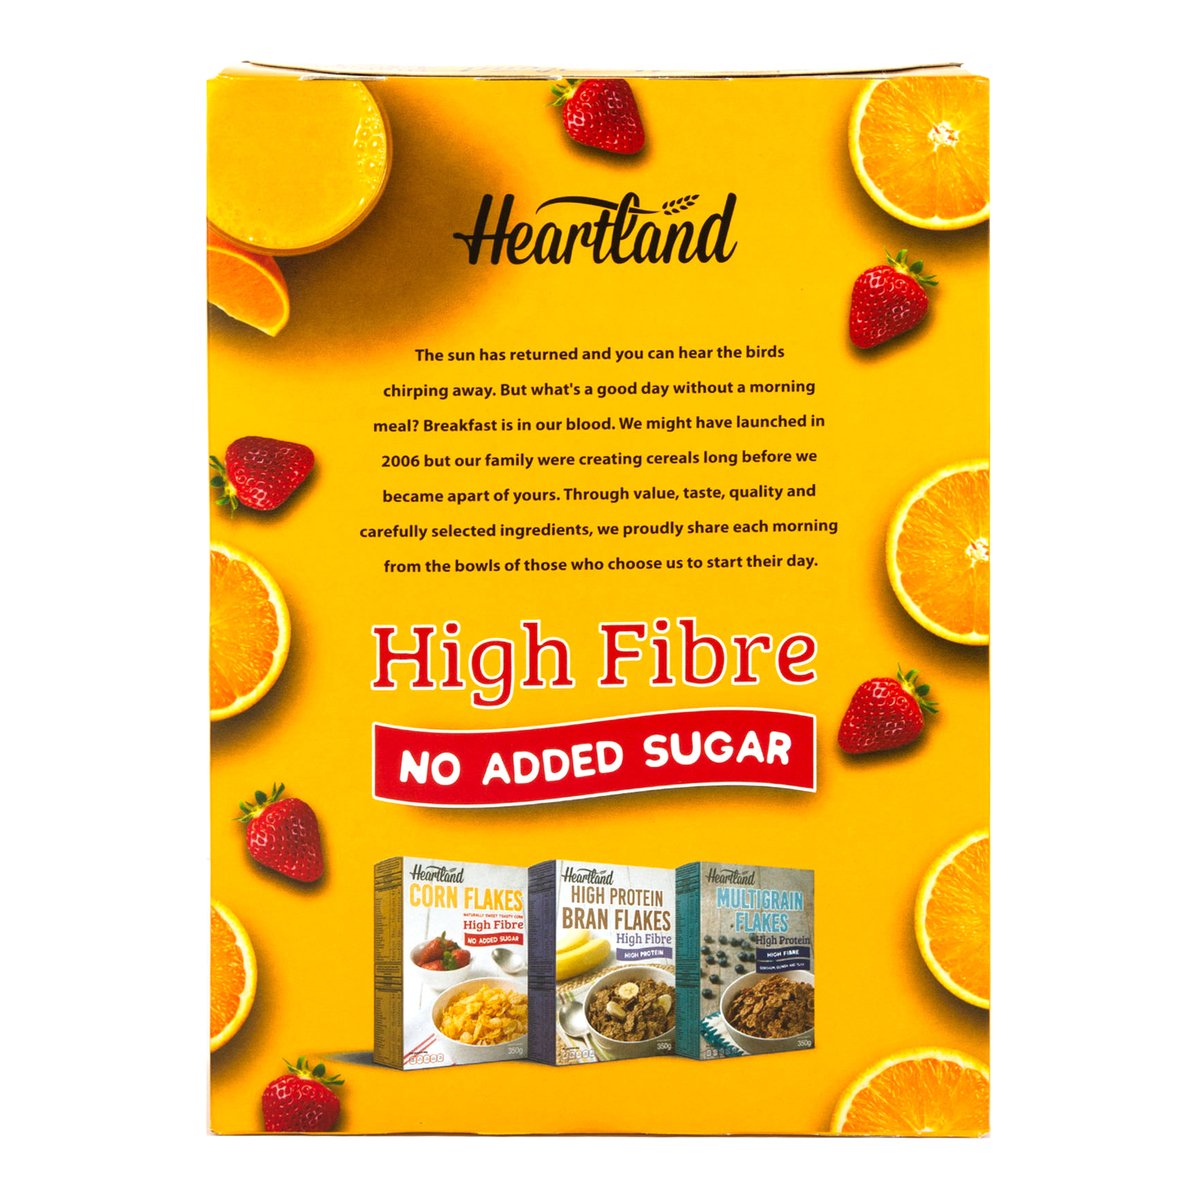 Heartland No Added Sugar Gluten Free Corn Flakes 350 g